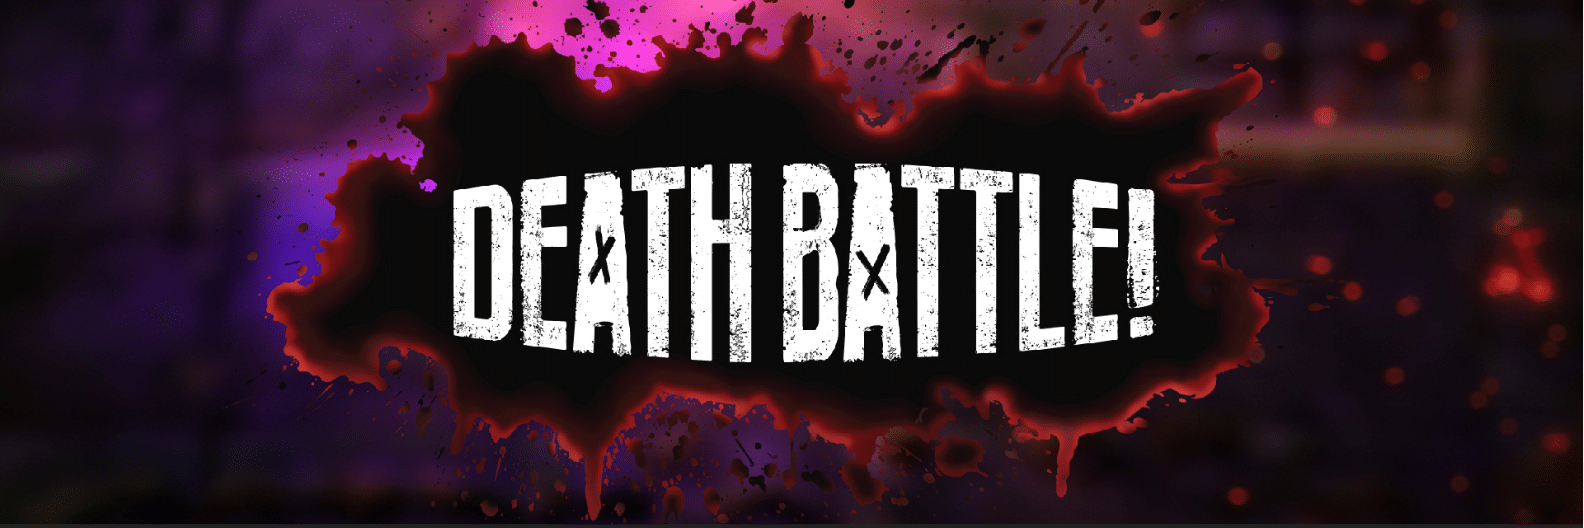 Death Battle, Top Ten Death Battle Episodes, Death Battle Season 10